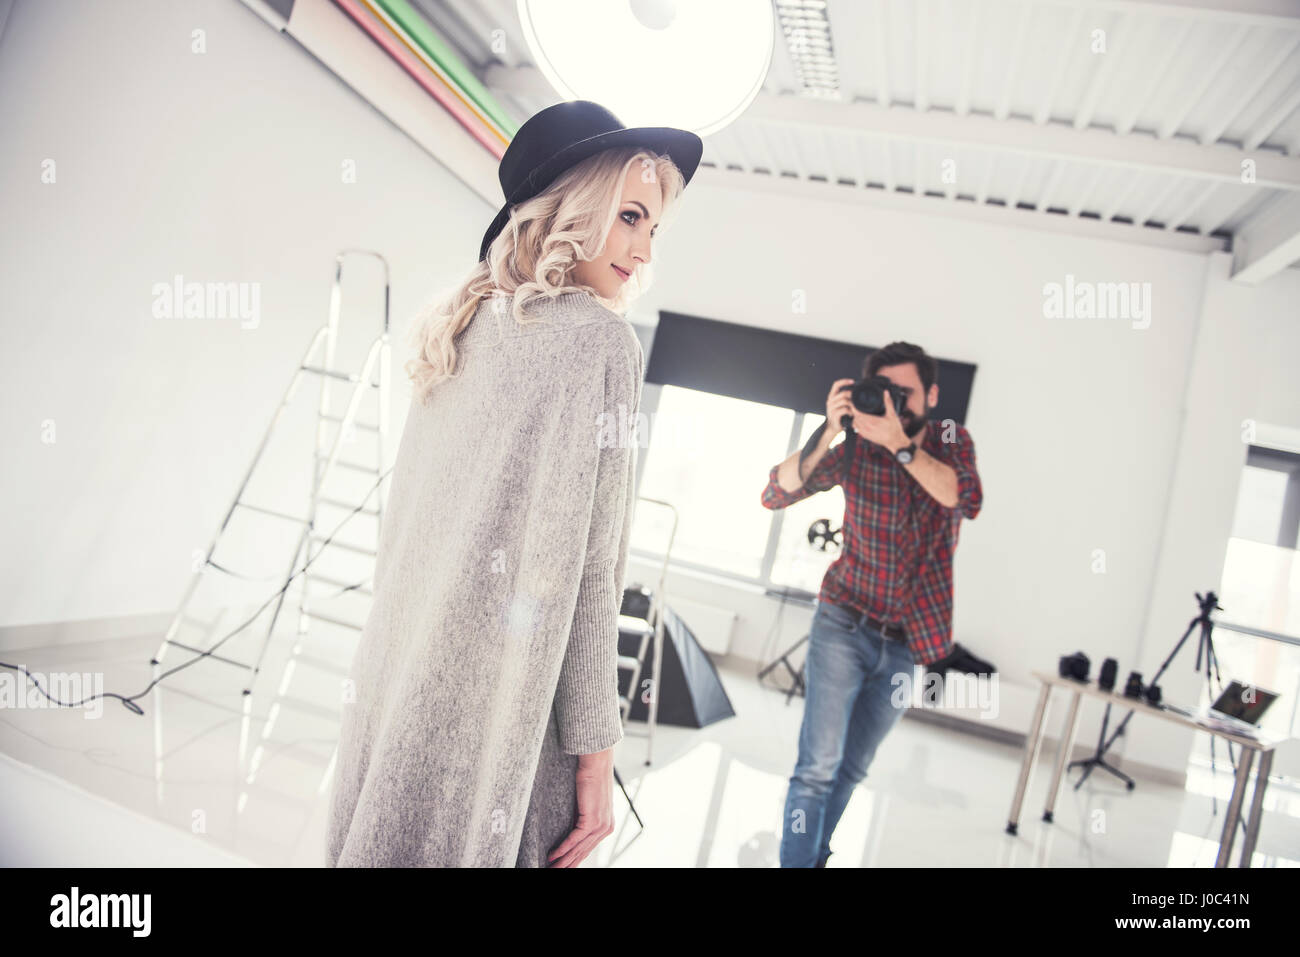 Male photographer photographing female model on studio white background Stock Photo